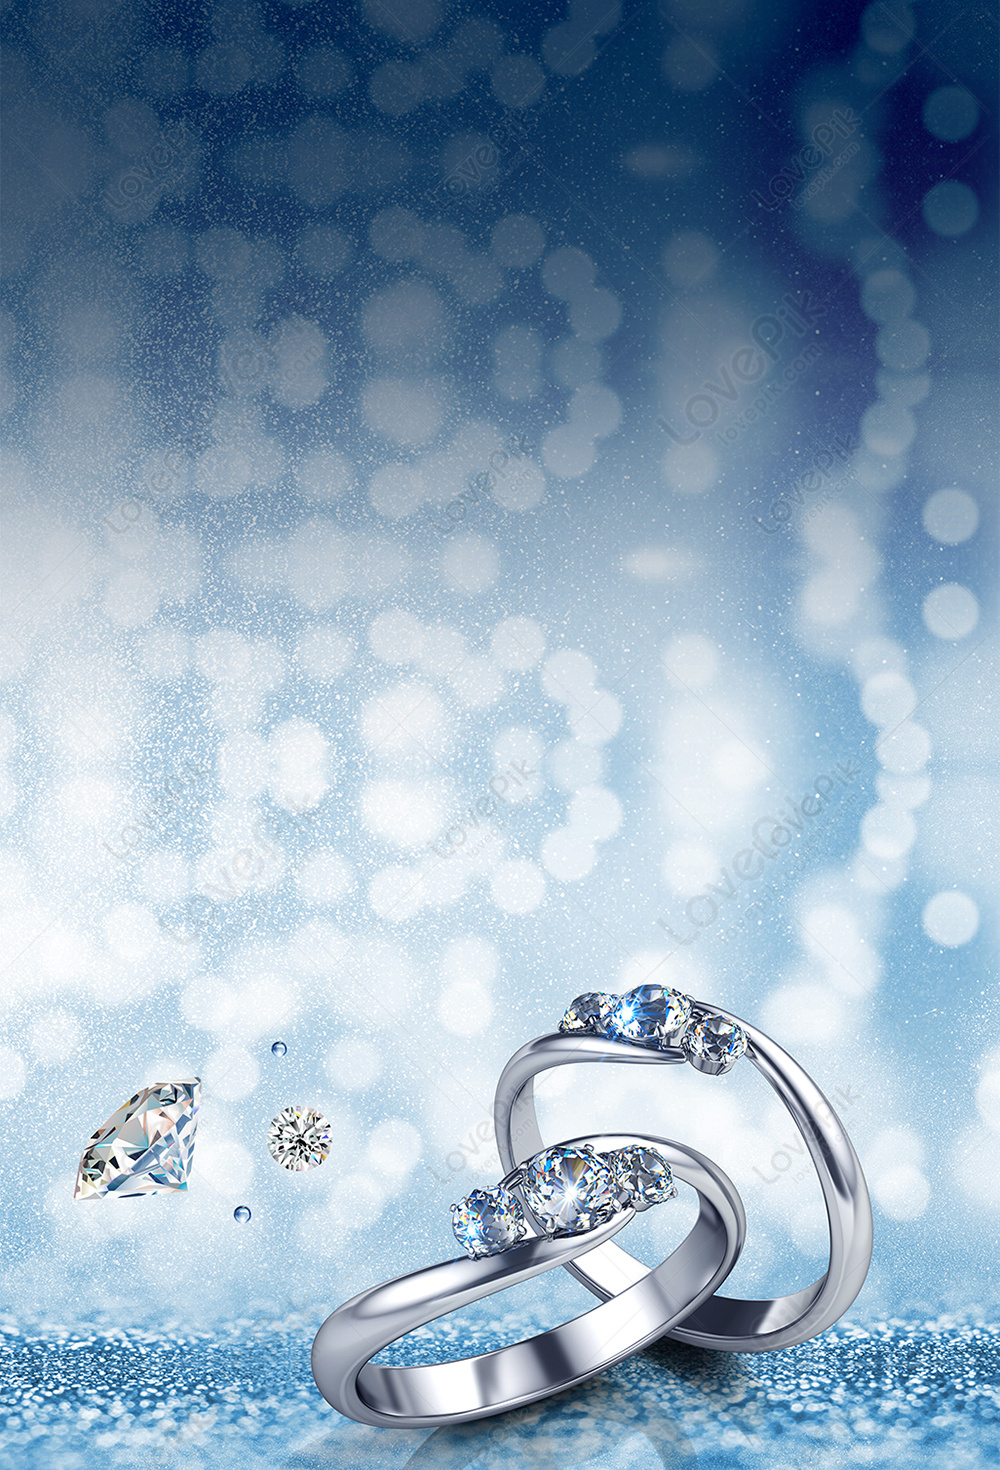 Blue Fantasy Diamond Ring Poster Background Download Free | Poster  Background Image on Lovepik | 401590971